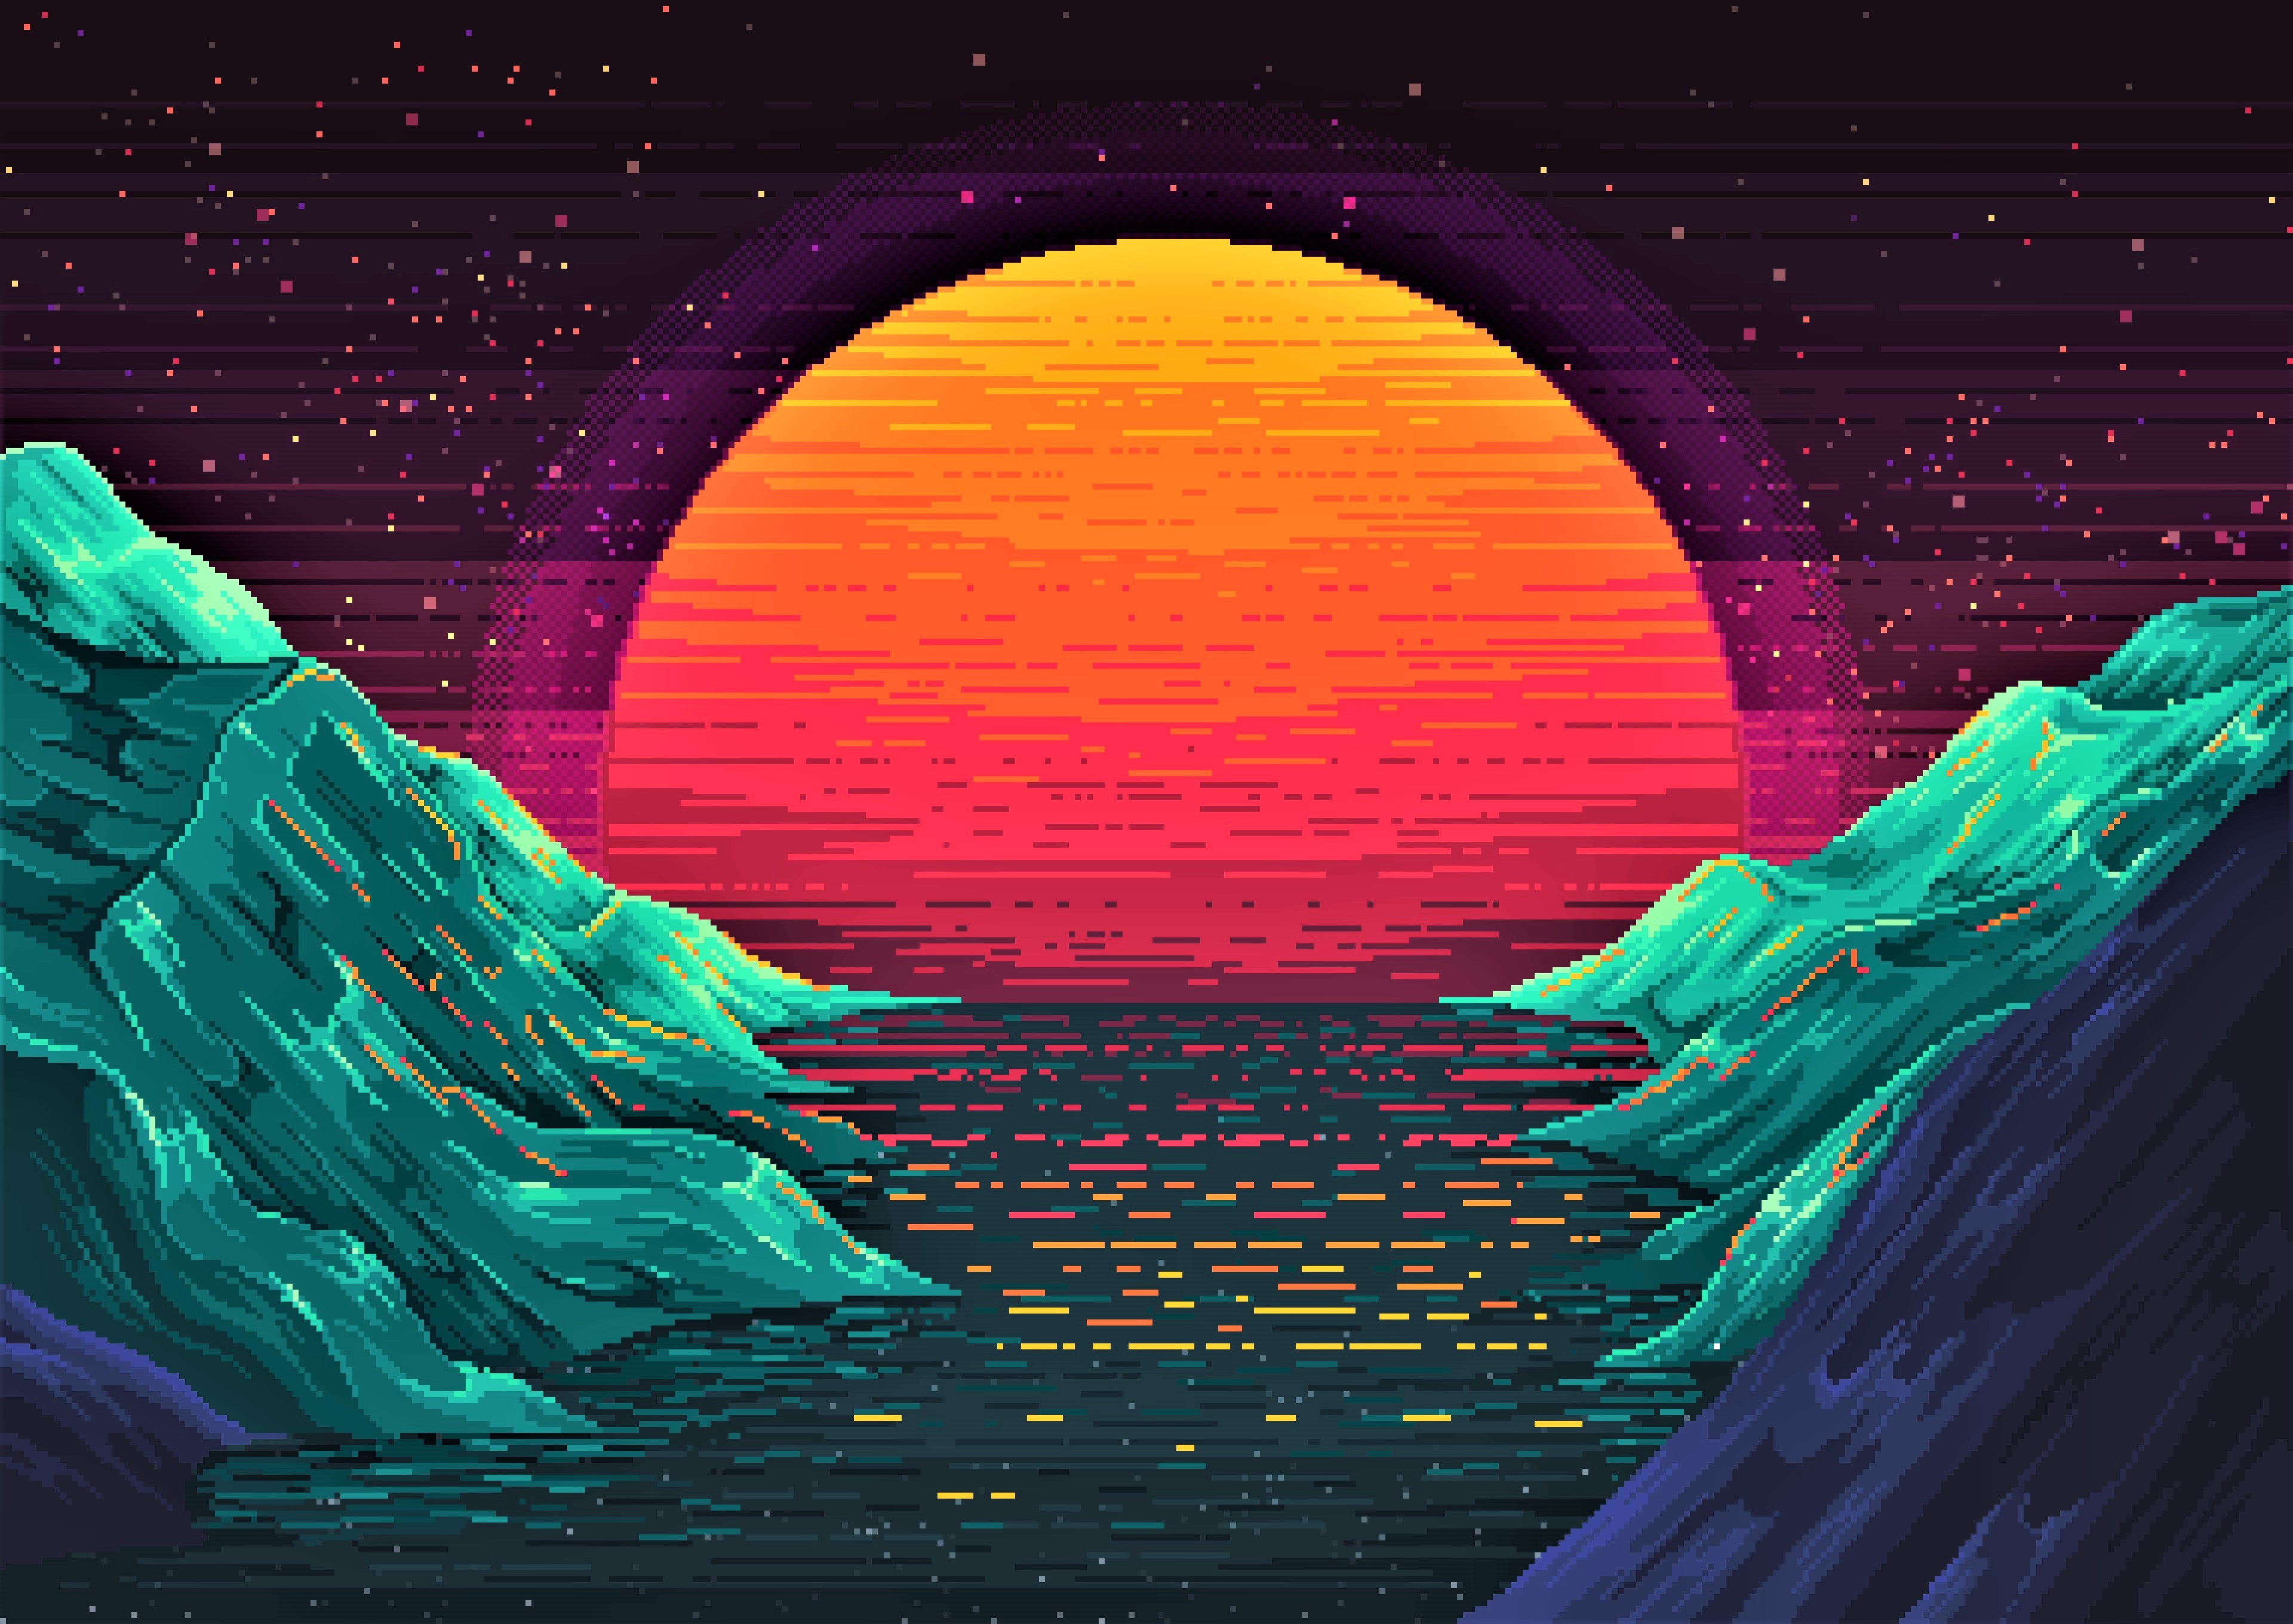 Sun, Artistic, Ocean, Retro Wave, Landscape, Pixel